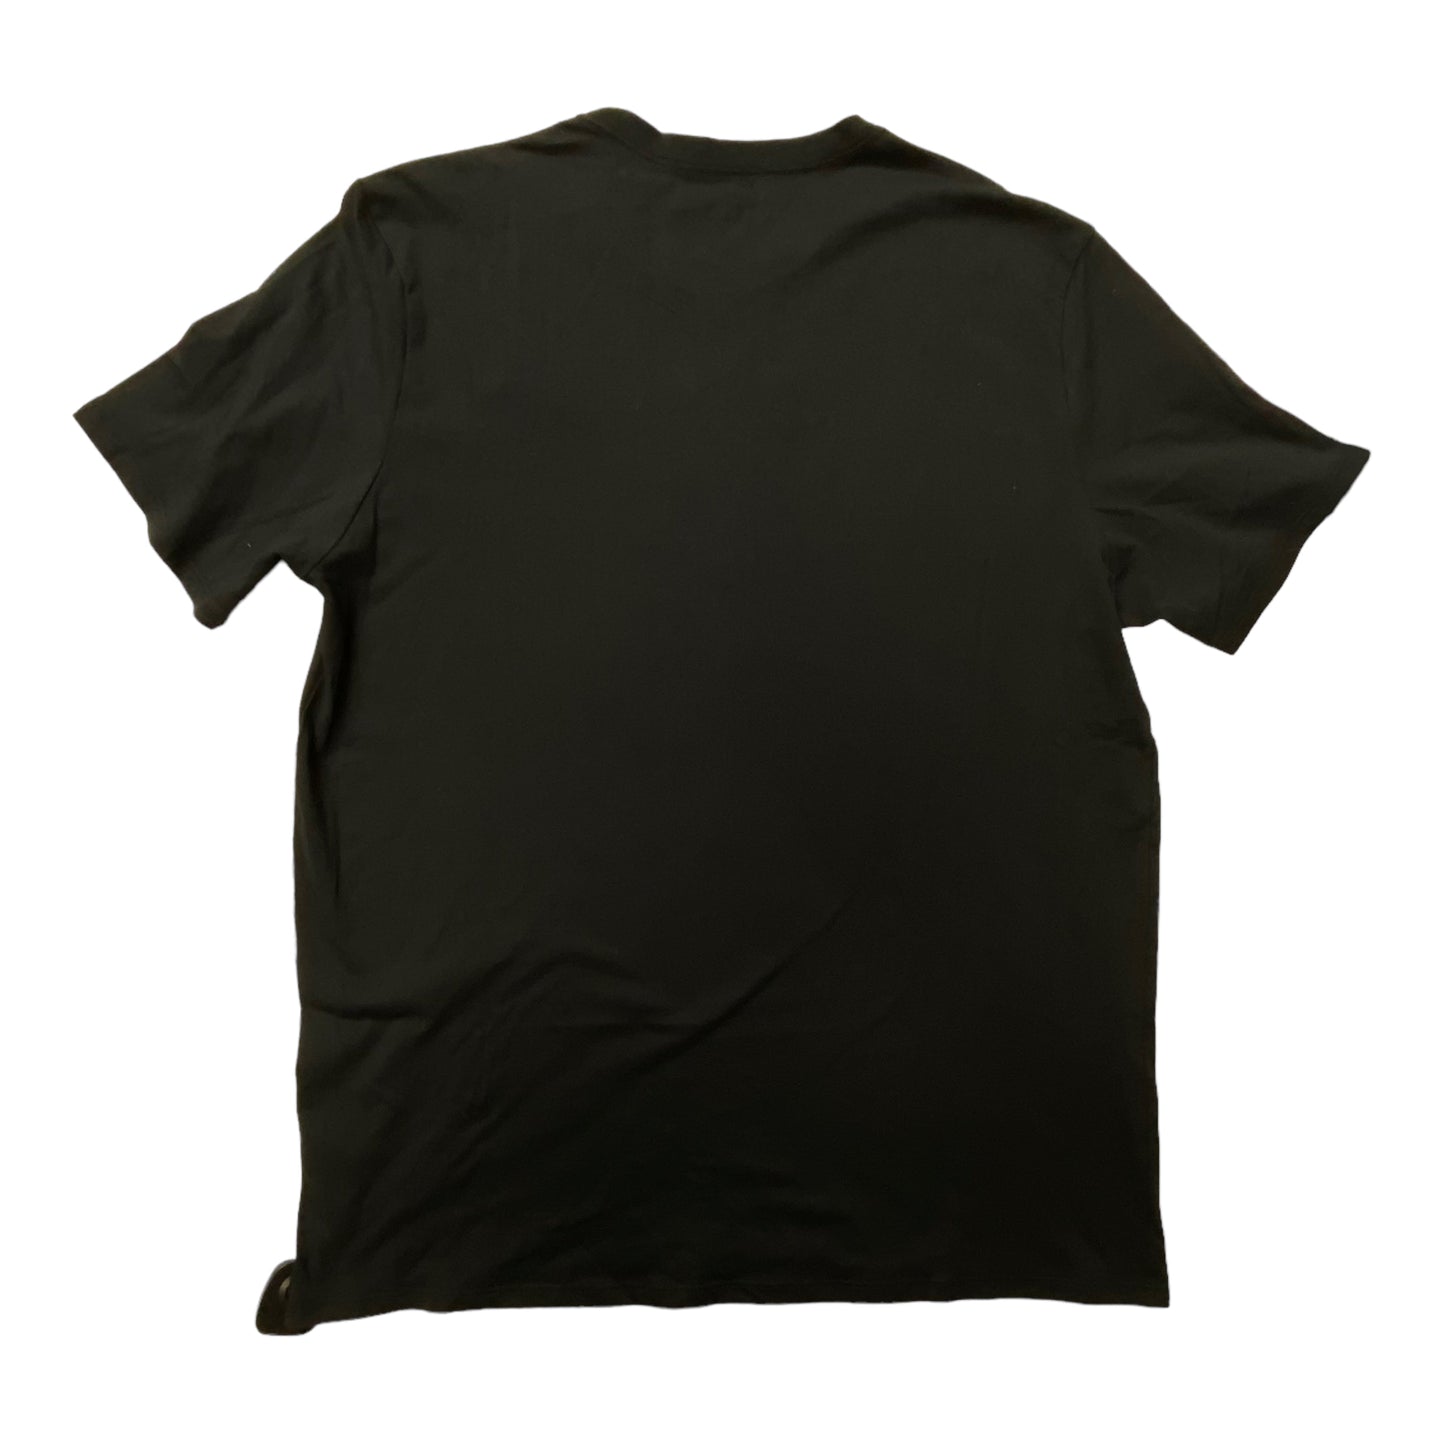 Black Top Short Sleeve Basic Calvin Klein, Size L